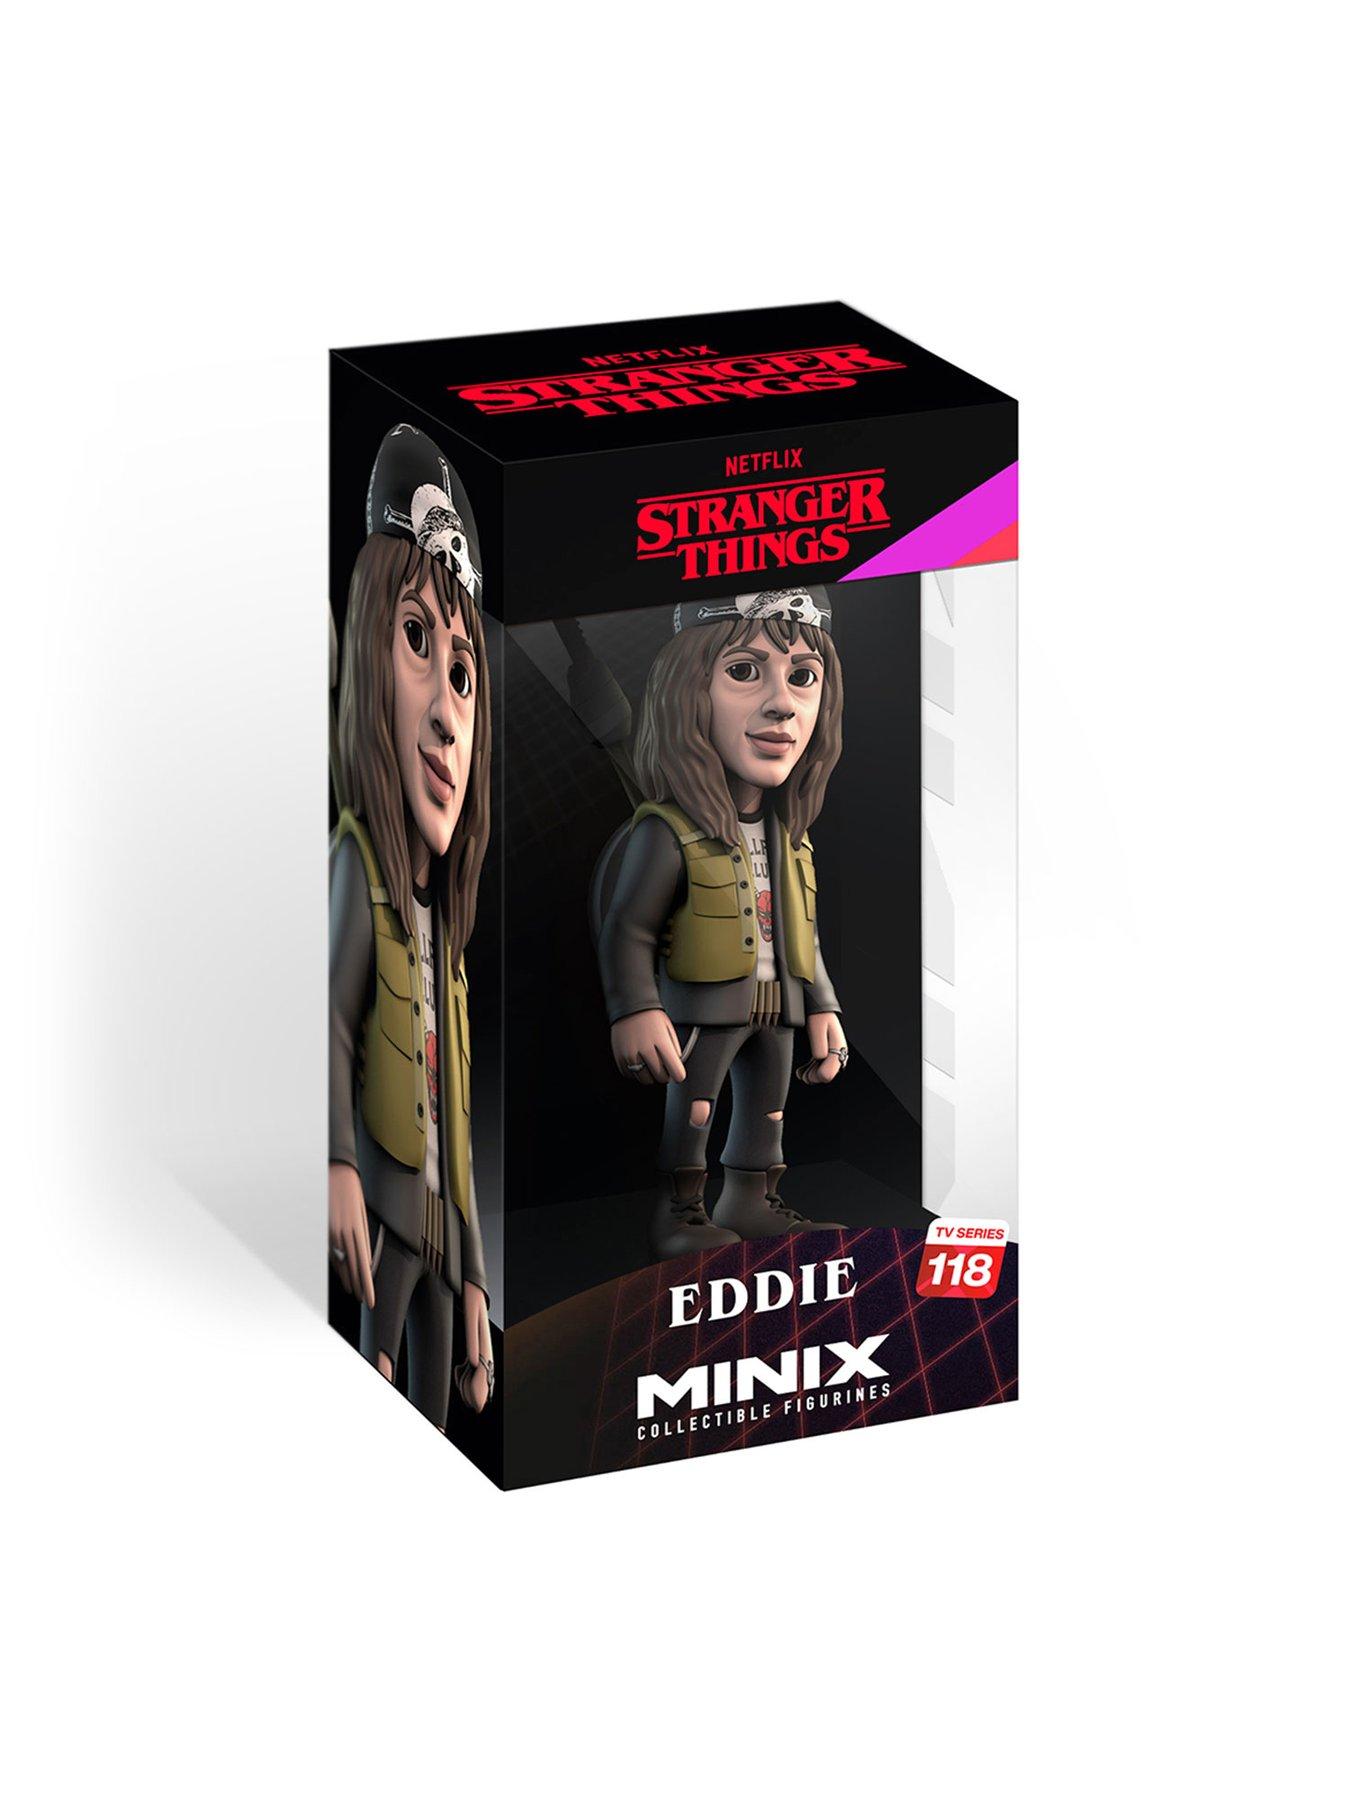 Bandai Minix Stranger Things Eddie Model, Collectable Eddie Stranger Things  Figure, Bandai Minix Stranger Things Merchandise Range